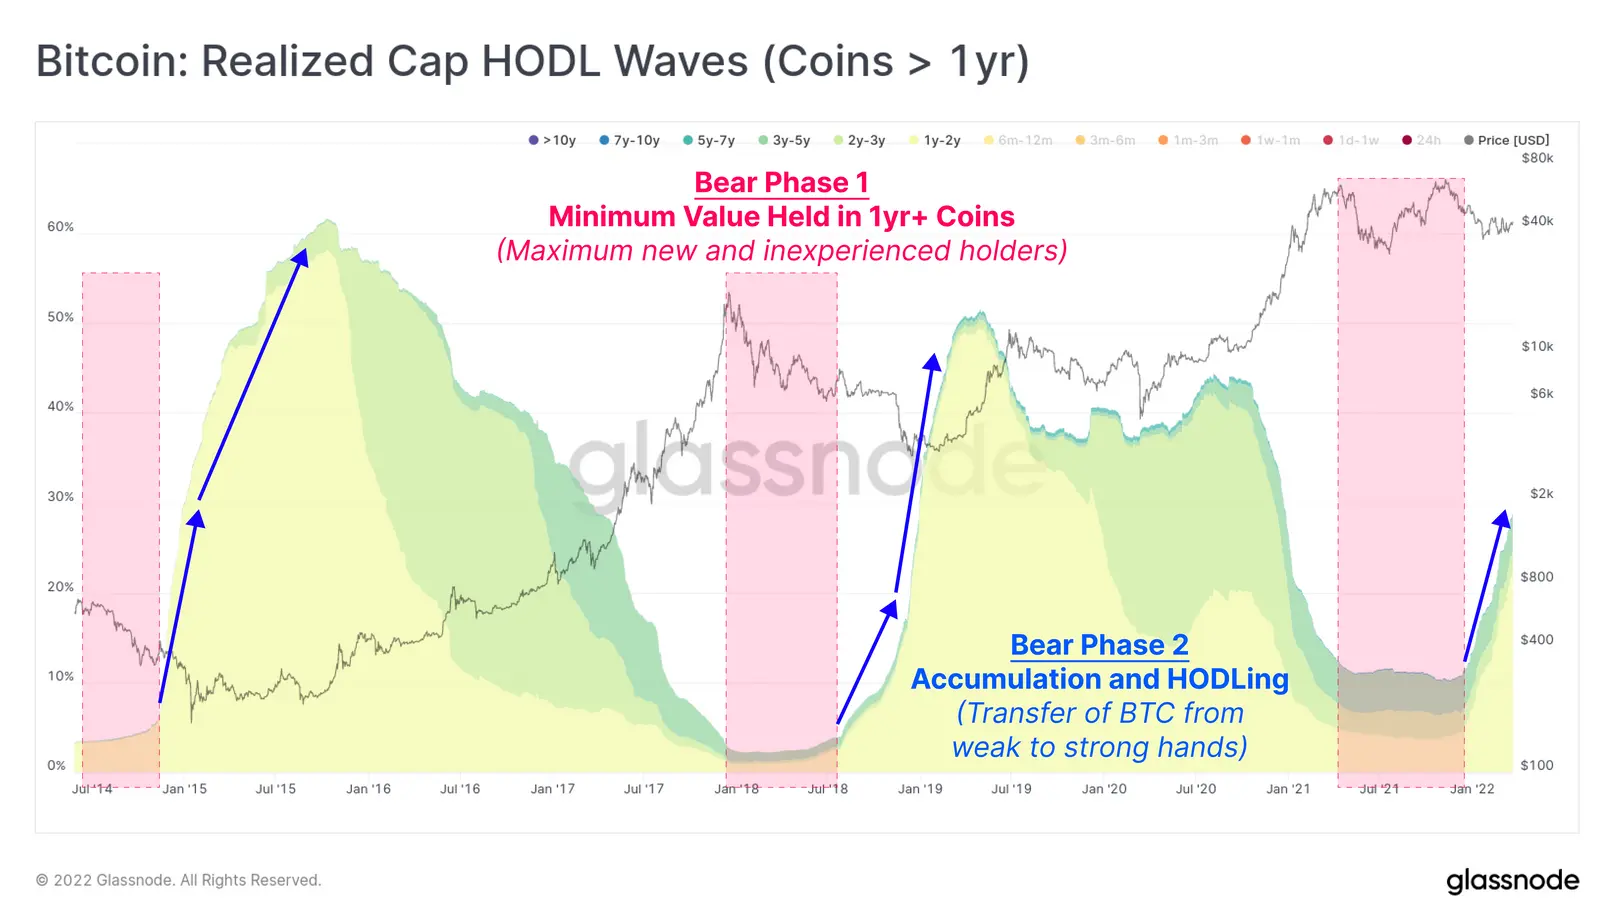 Bitcoin Realized Cap HODL Waves - Grafik